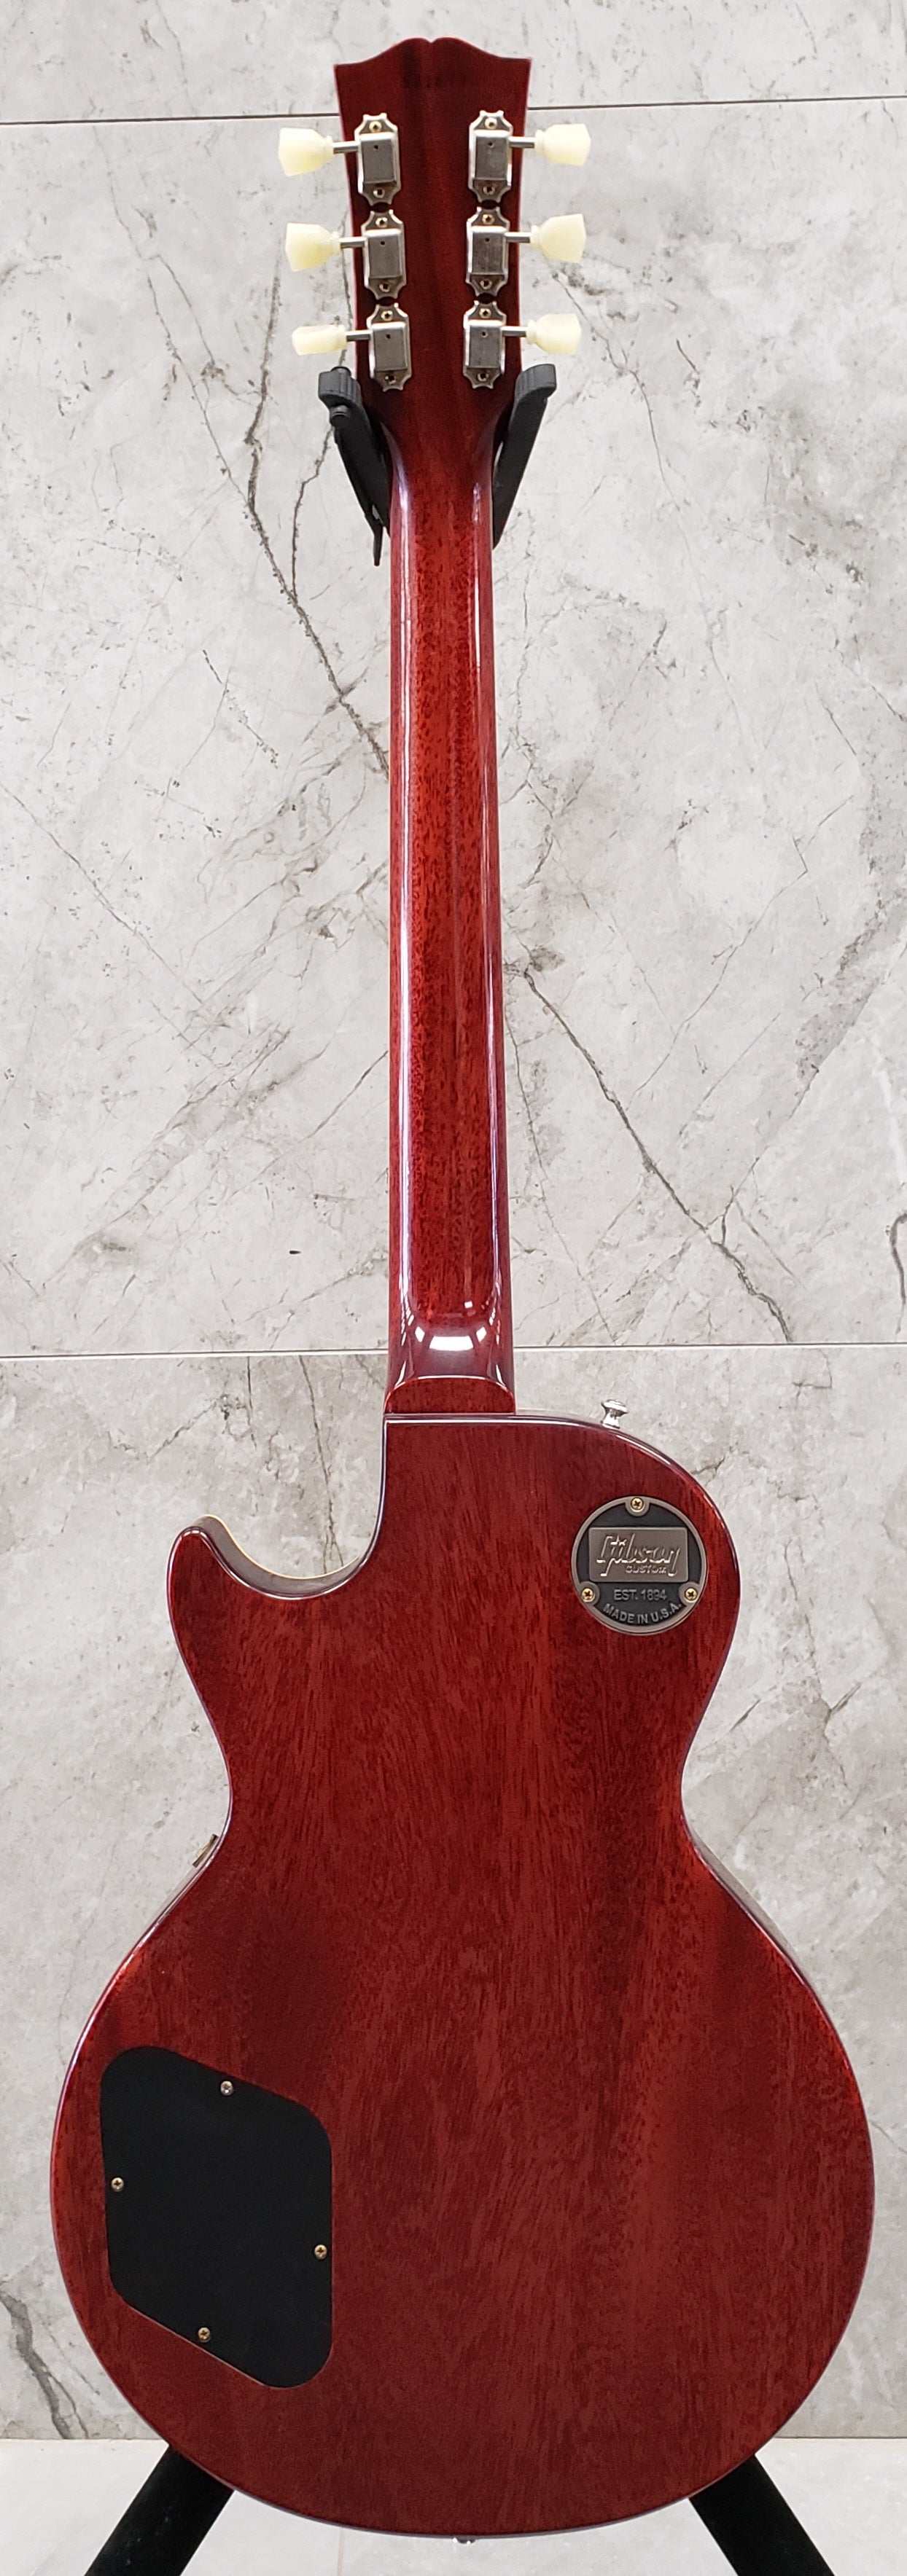 Gibson Custom Shop 1959 Les Paul Standard Reissue VOS Factory Burst - Nickel Hardware LPR59VOFANH SERIAL NUMBER 901673 8.6 LBS